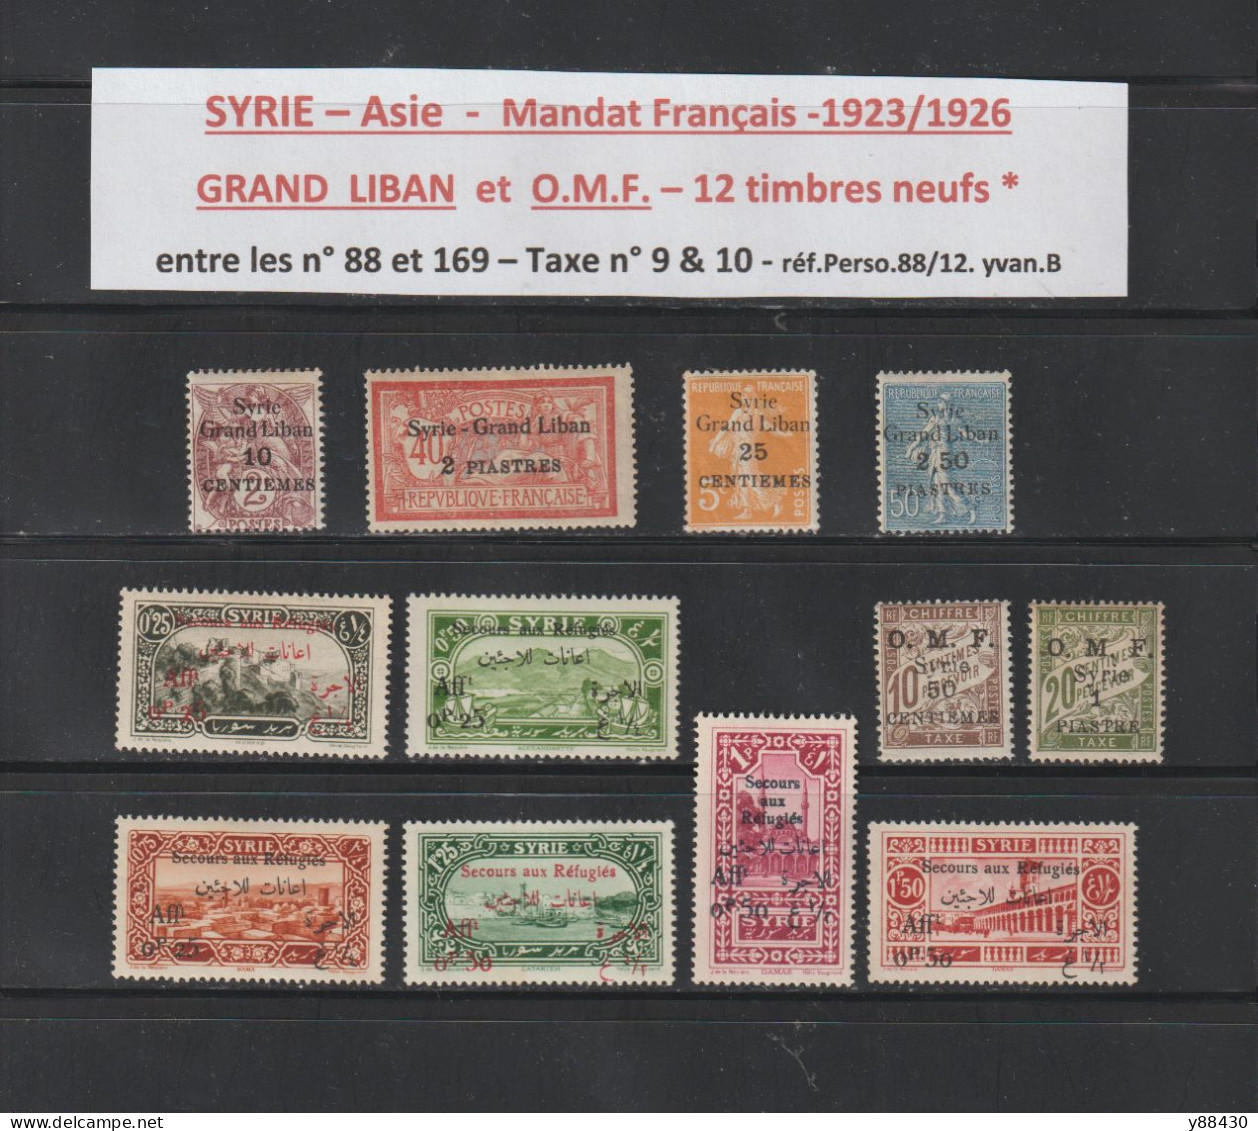 GRAND LIBAN Et O.M.F.- Mandat Français - 12 Timbres Dont 2 Taxe - Neuf * De 1923/1926 - 2 Scan - Neufs